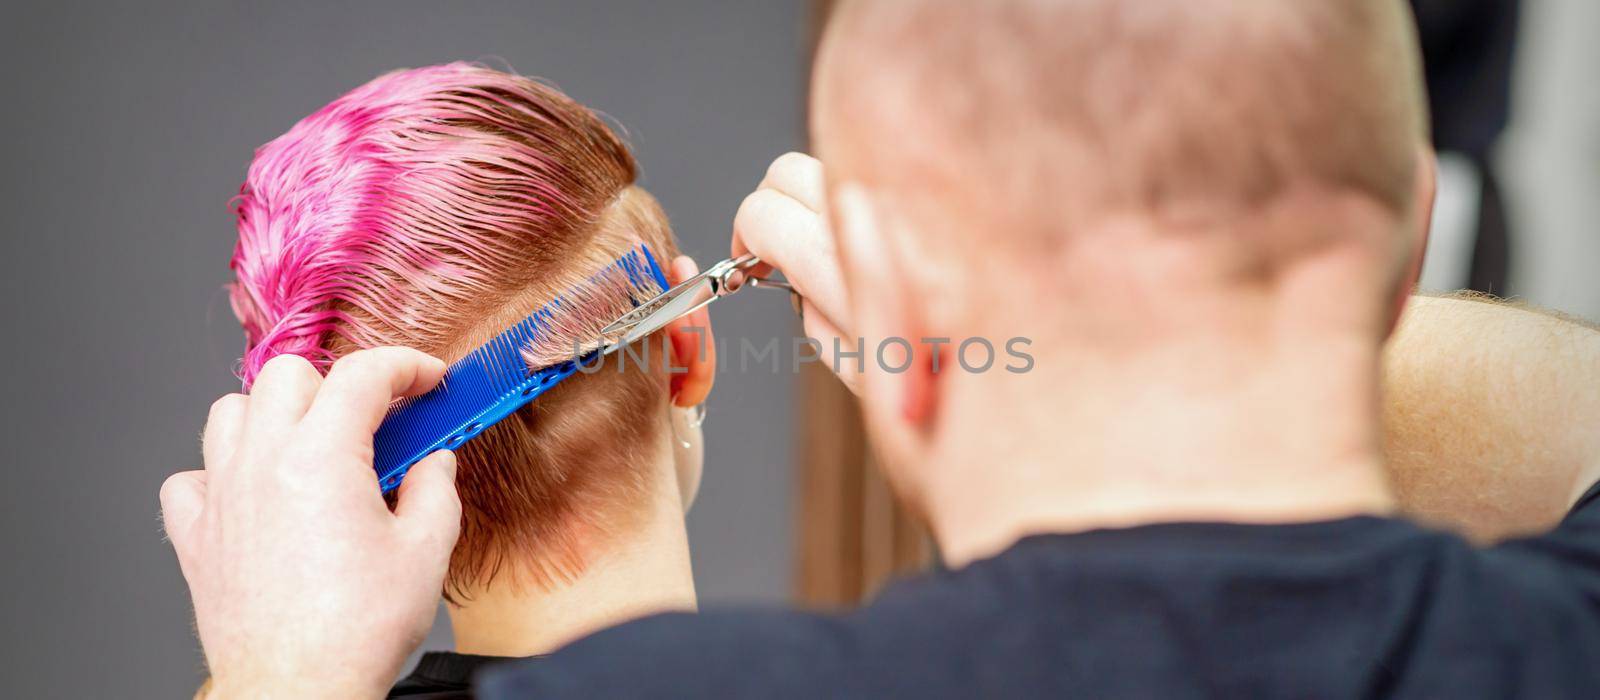 Woman having a new haircut. Male hairstylist cutting pink short hair with scissors in a hair salon